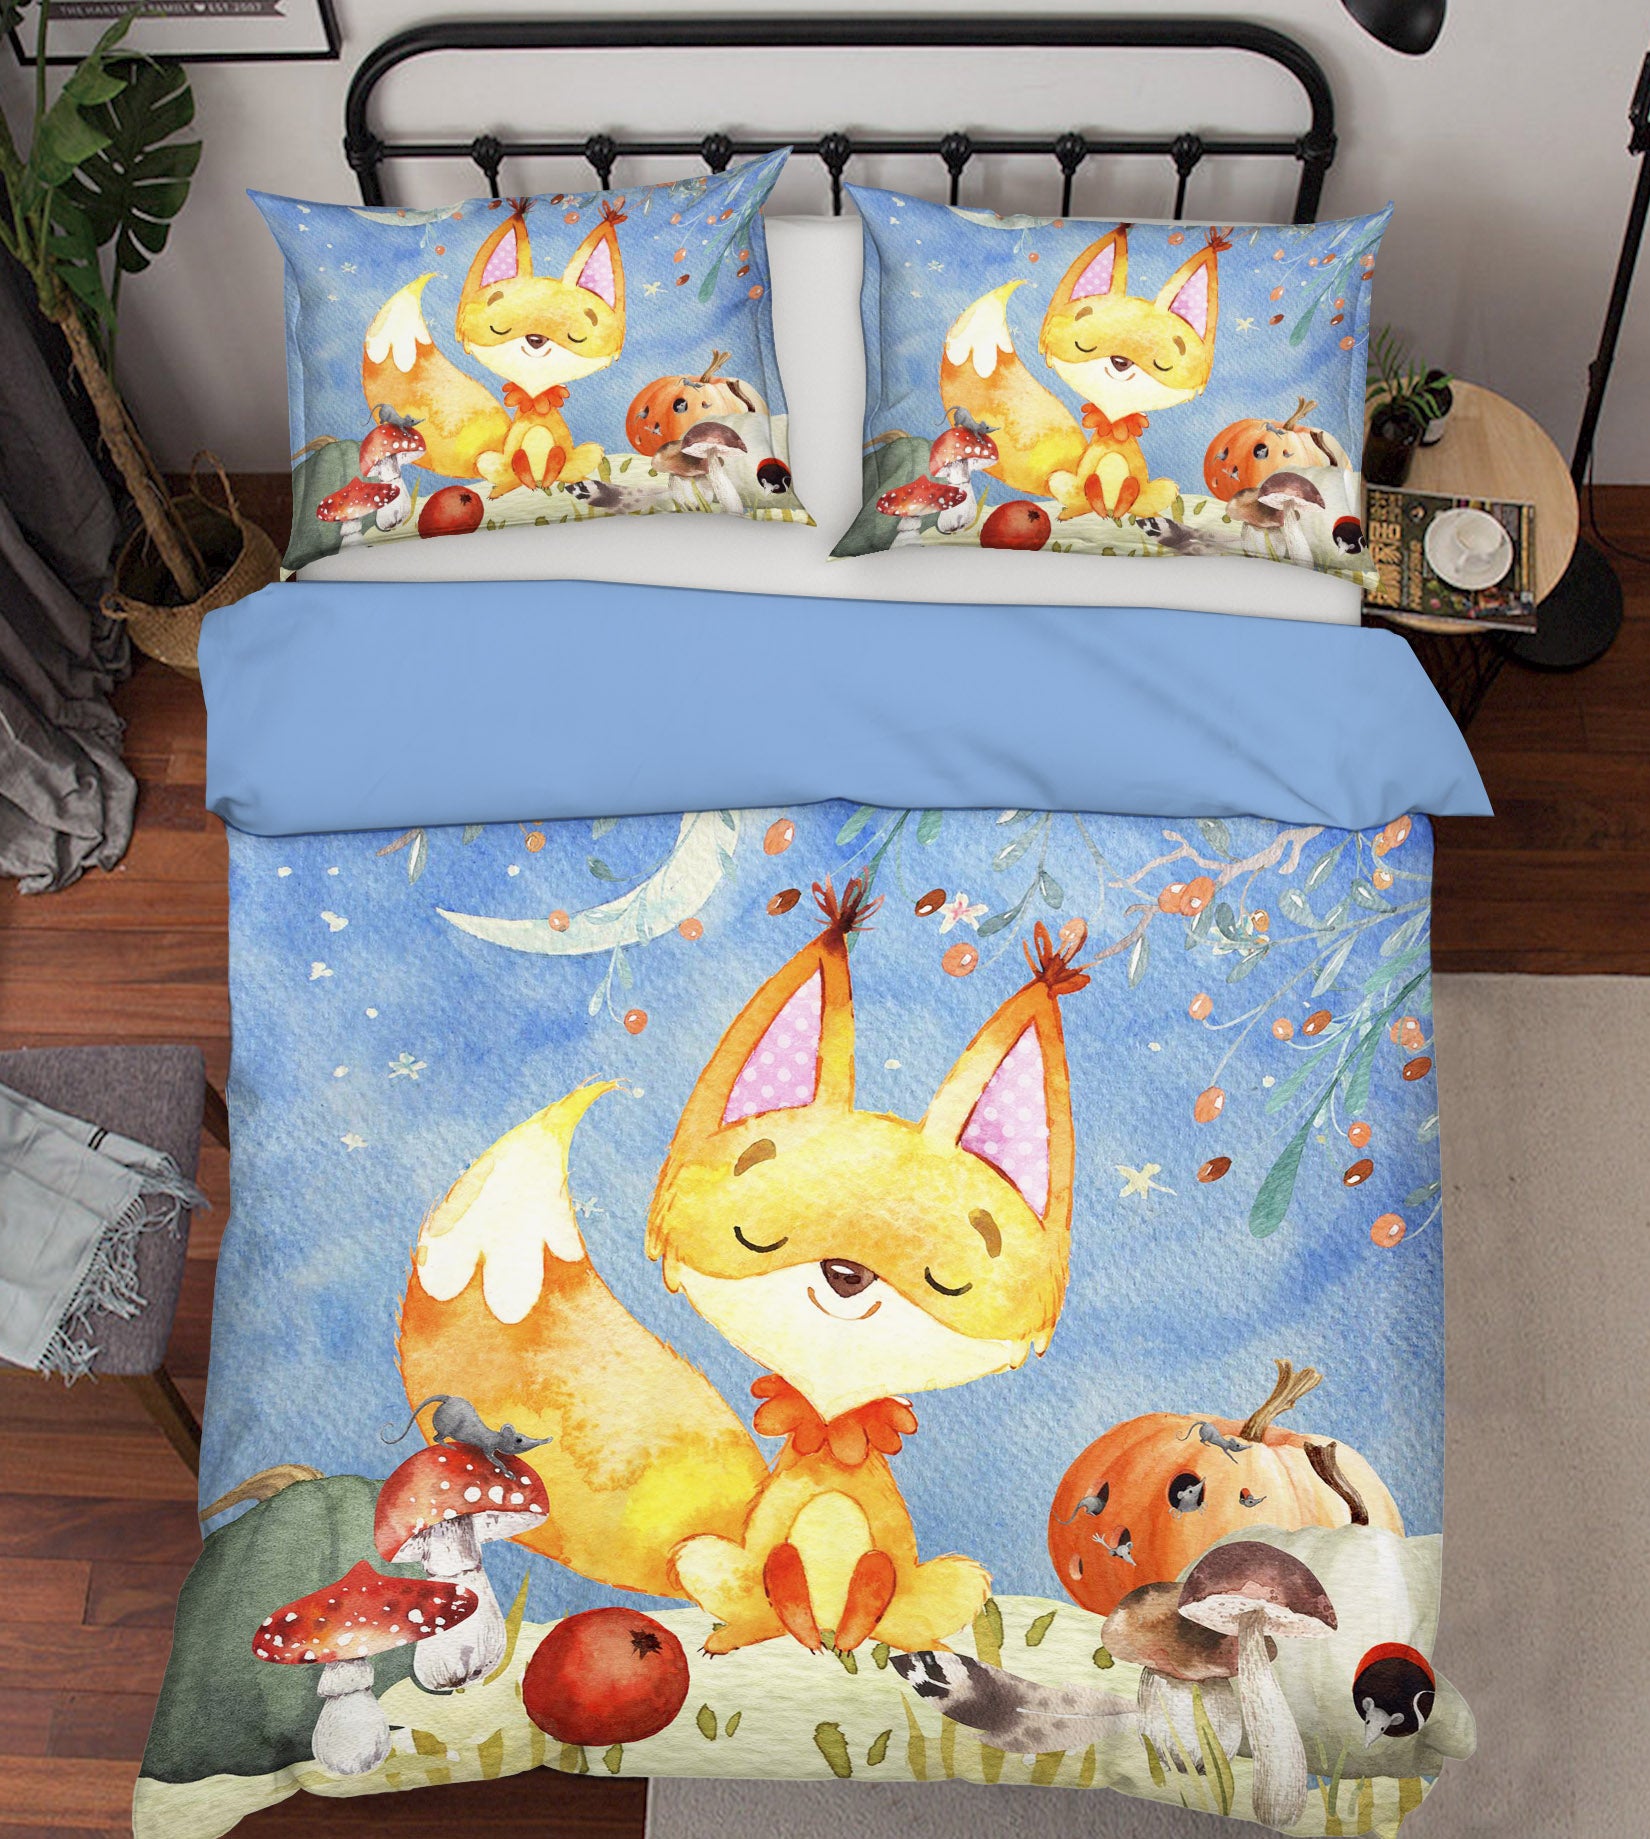 3D Fox Mushroom 249 Uta Naumann Bedding Bed Pillowcases Quilt